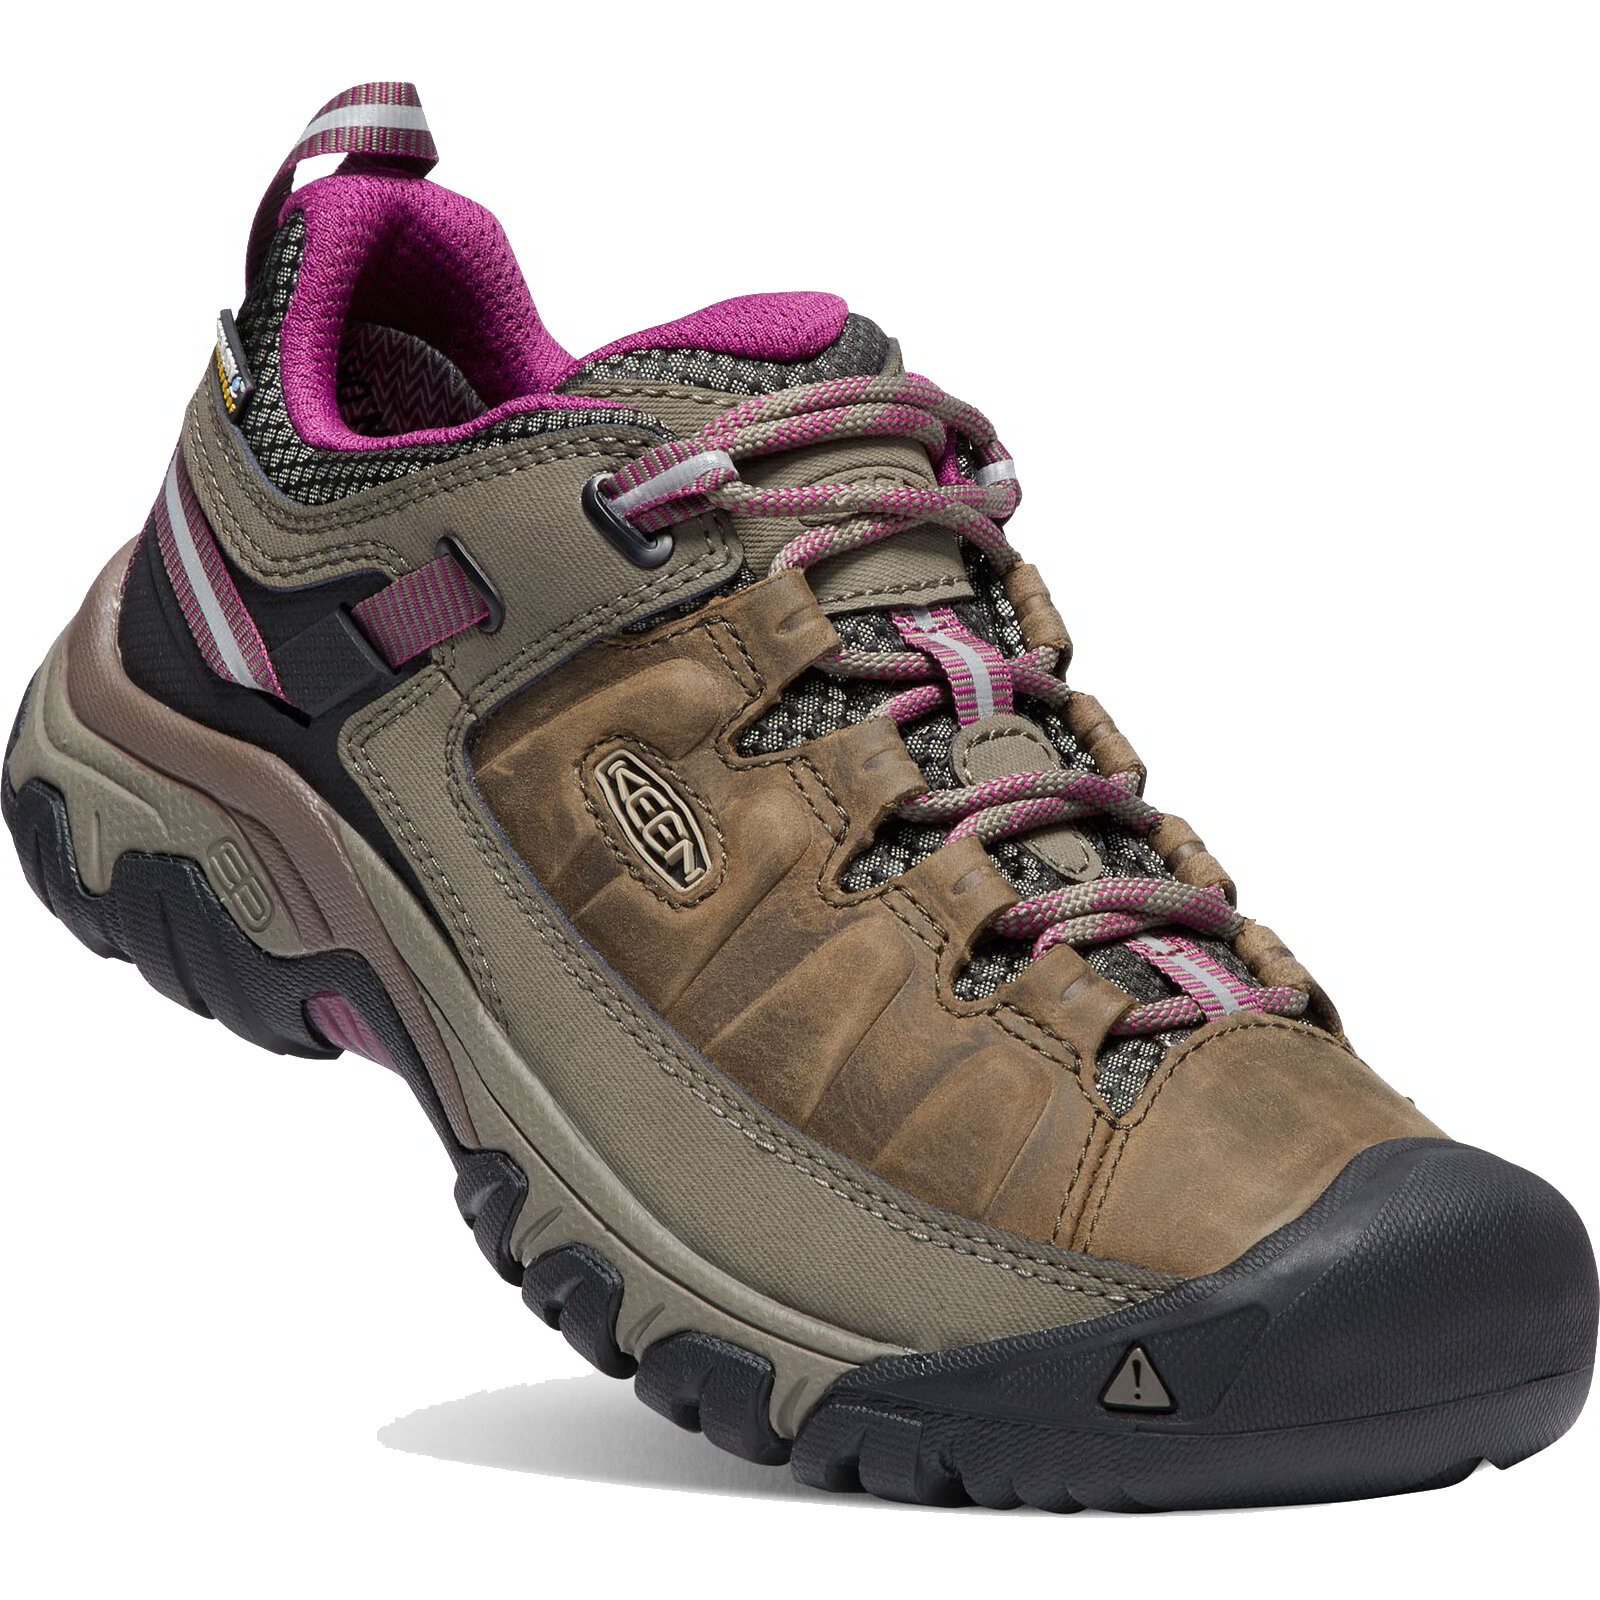 Keen Women's Targhee III WP Waterproof Walking Hiking Shoes - UK 6